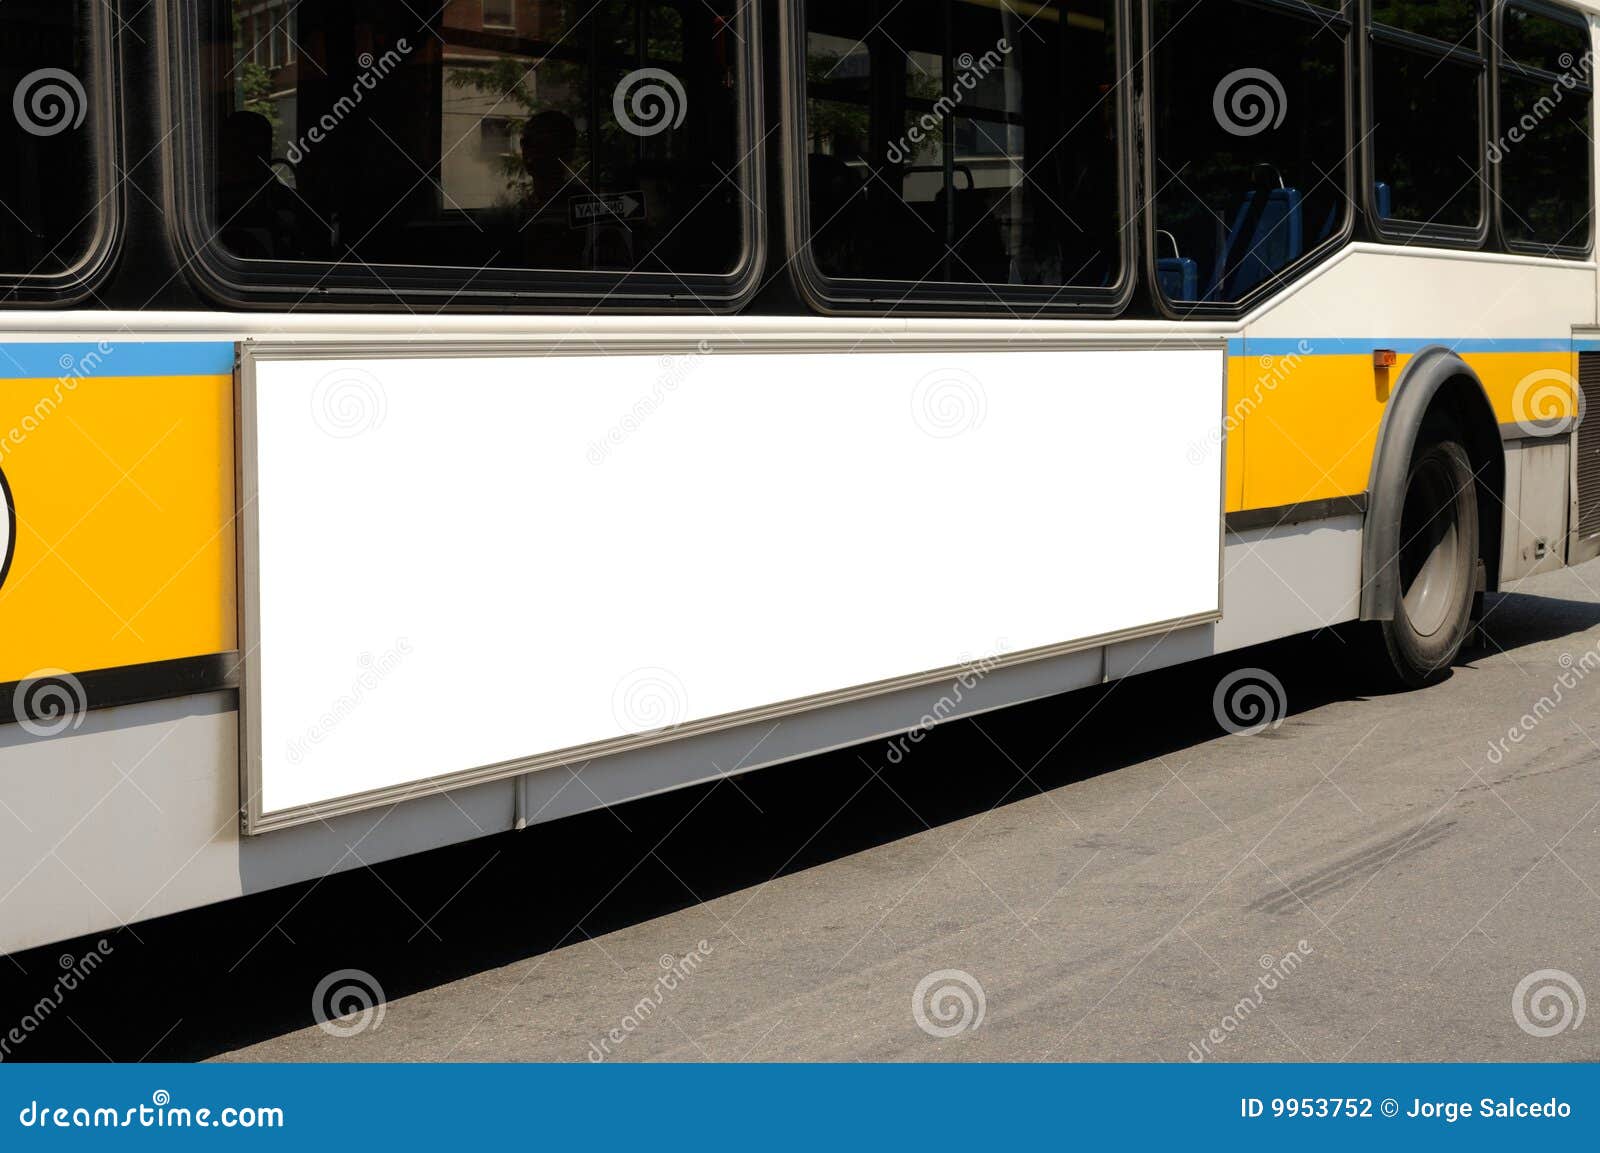 bus billboard